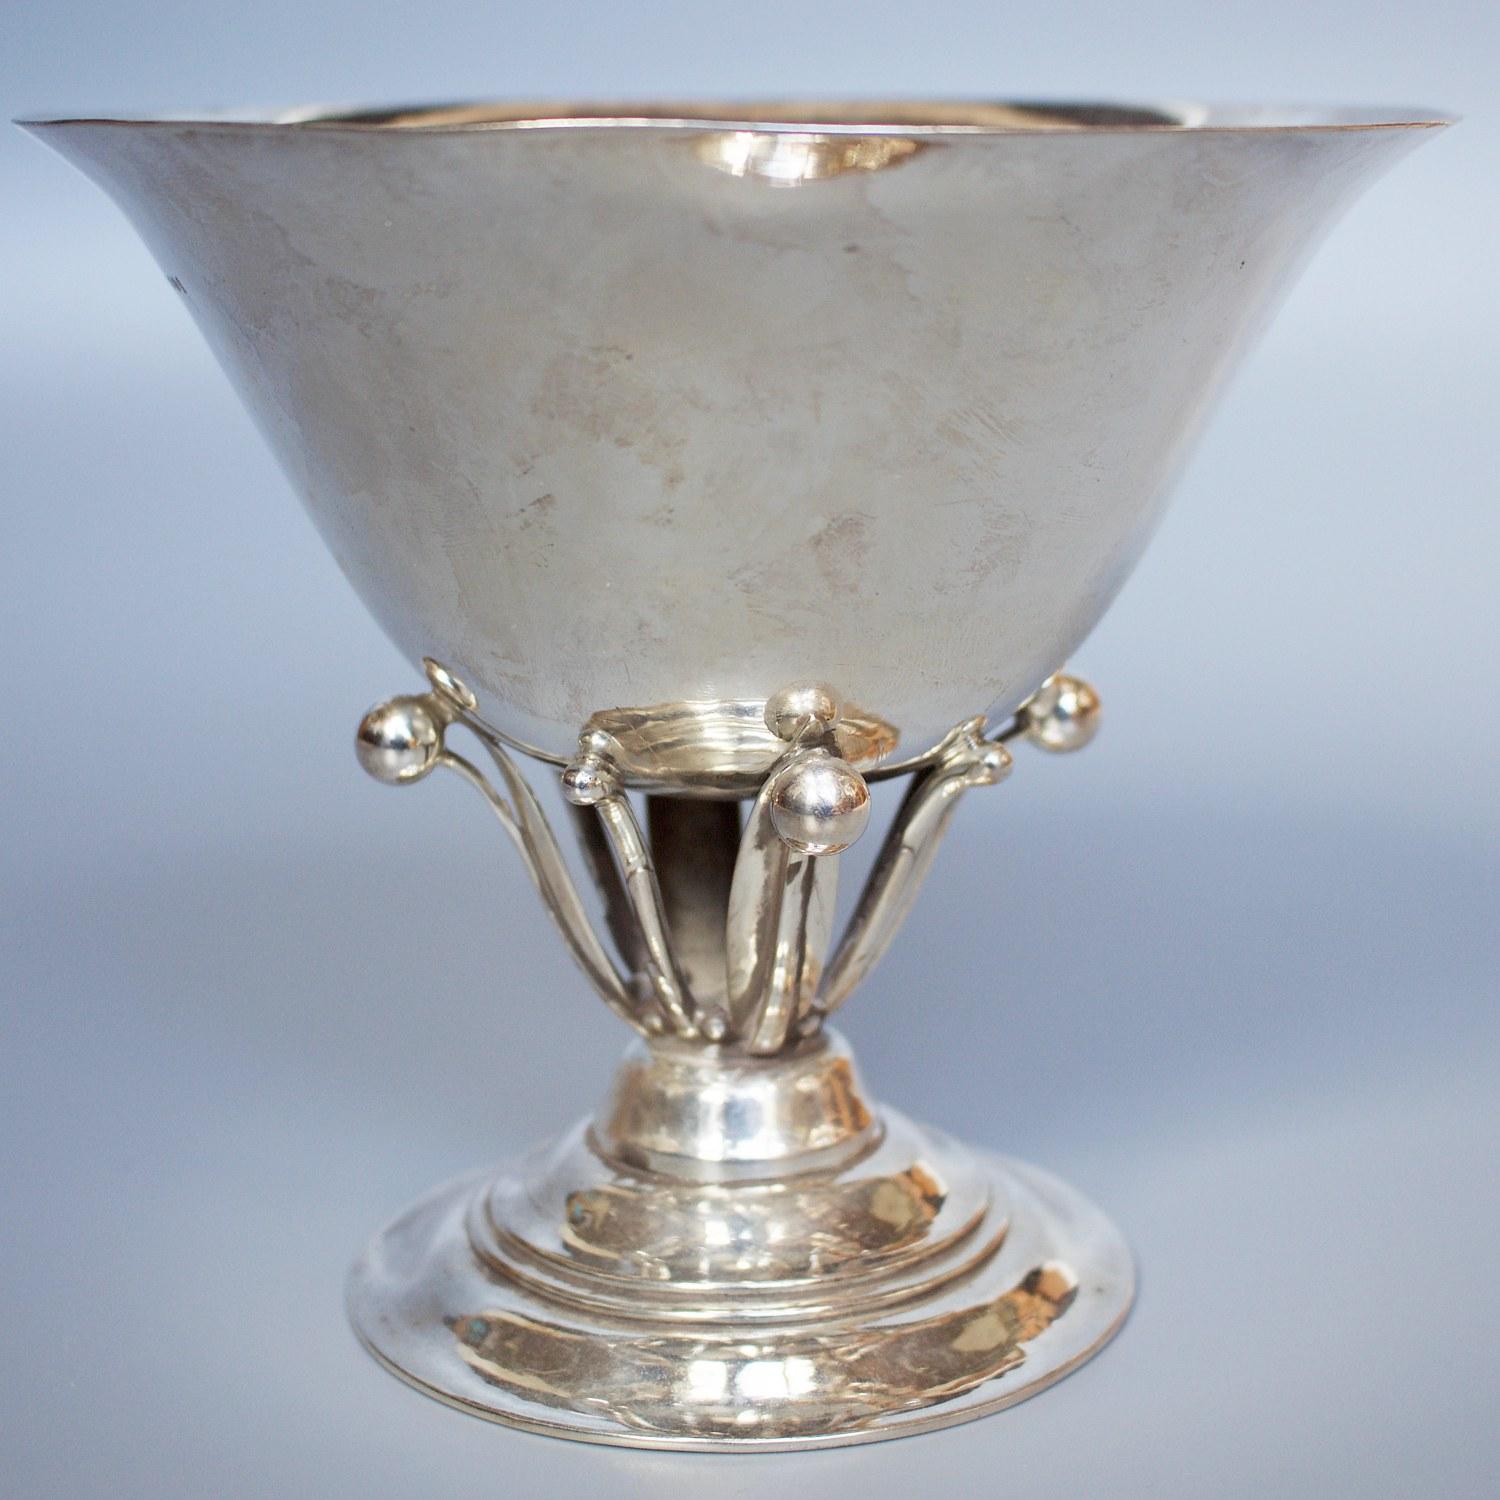 Danish Georg Jensen Sterling Silver, Tazza Cup Designed by Johan Rohde, circa 1930